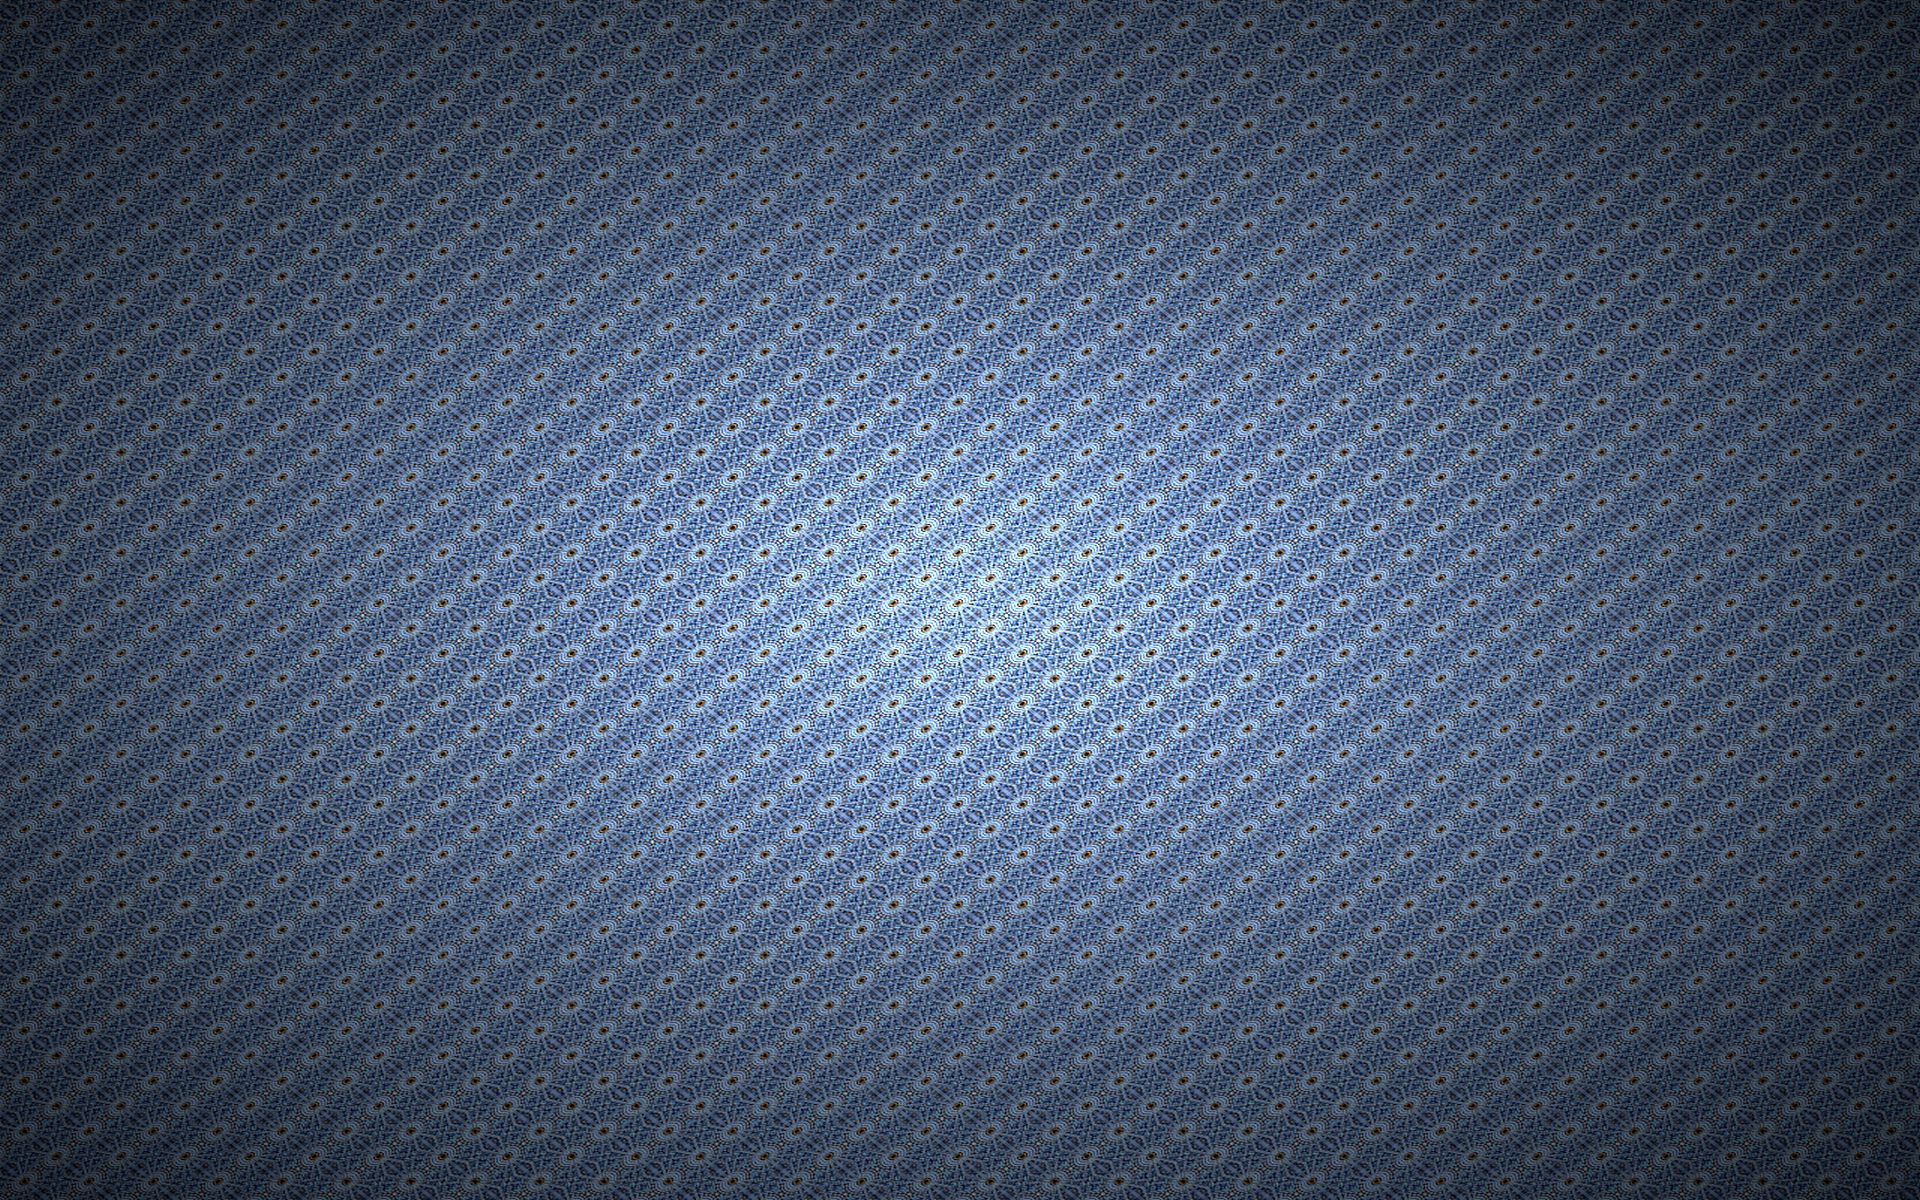 background, patterns, shine, light, texture, textures, grey, stains, spots Image for desktop